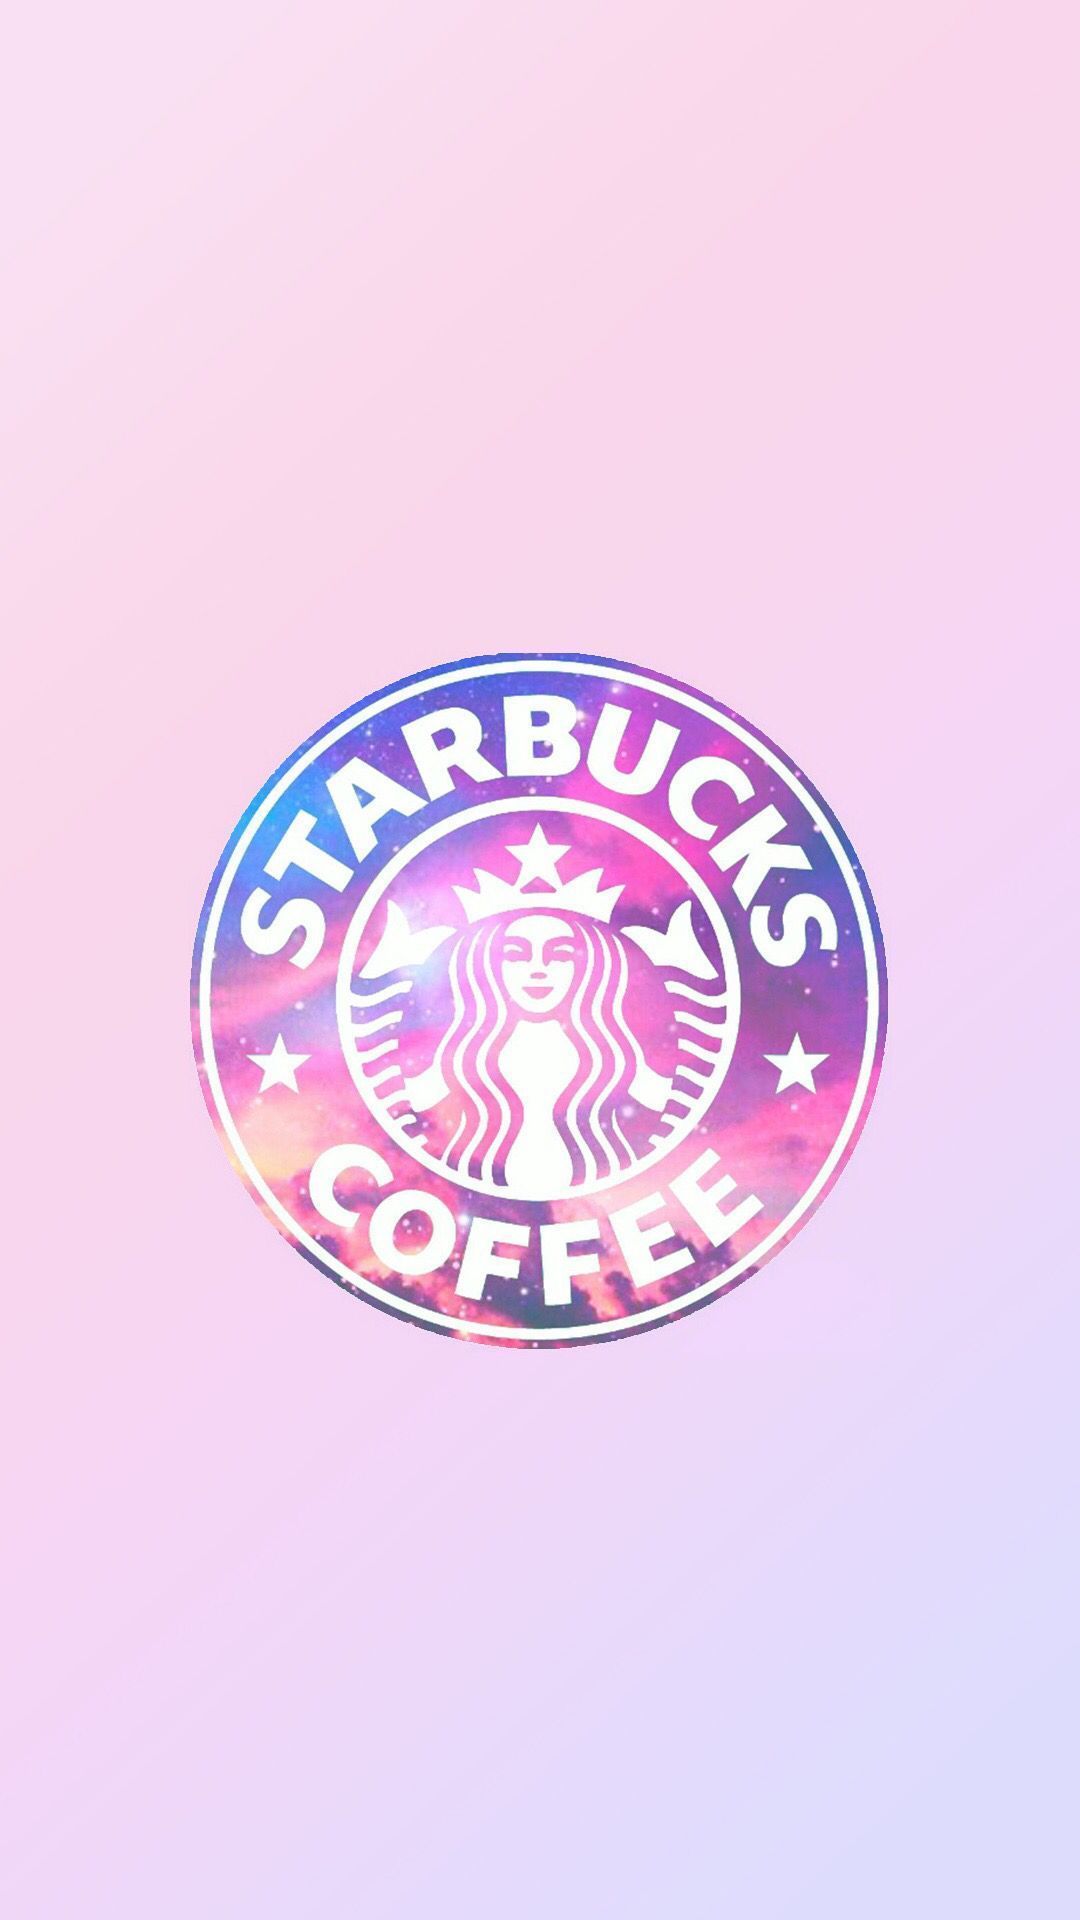 Starbucks. Starbucks wallpaper, Coffee wallpaper iphone, Wallpaper iphone cute